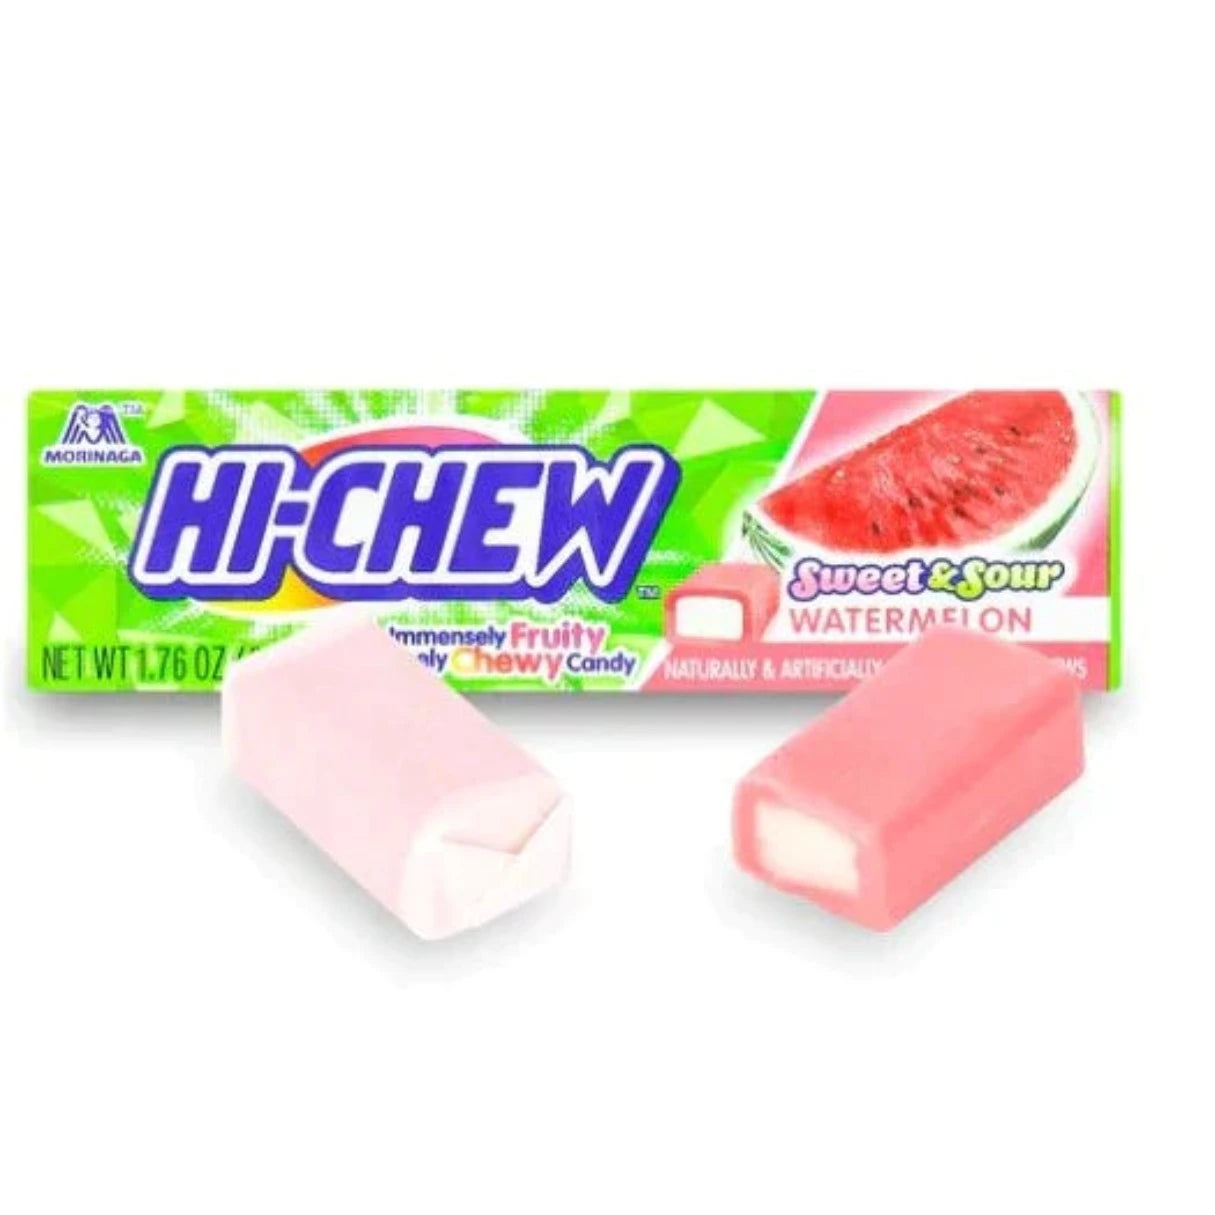 Hi-Chew Watermelon Fruit Chews 1.76oz -15ct